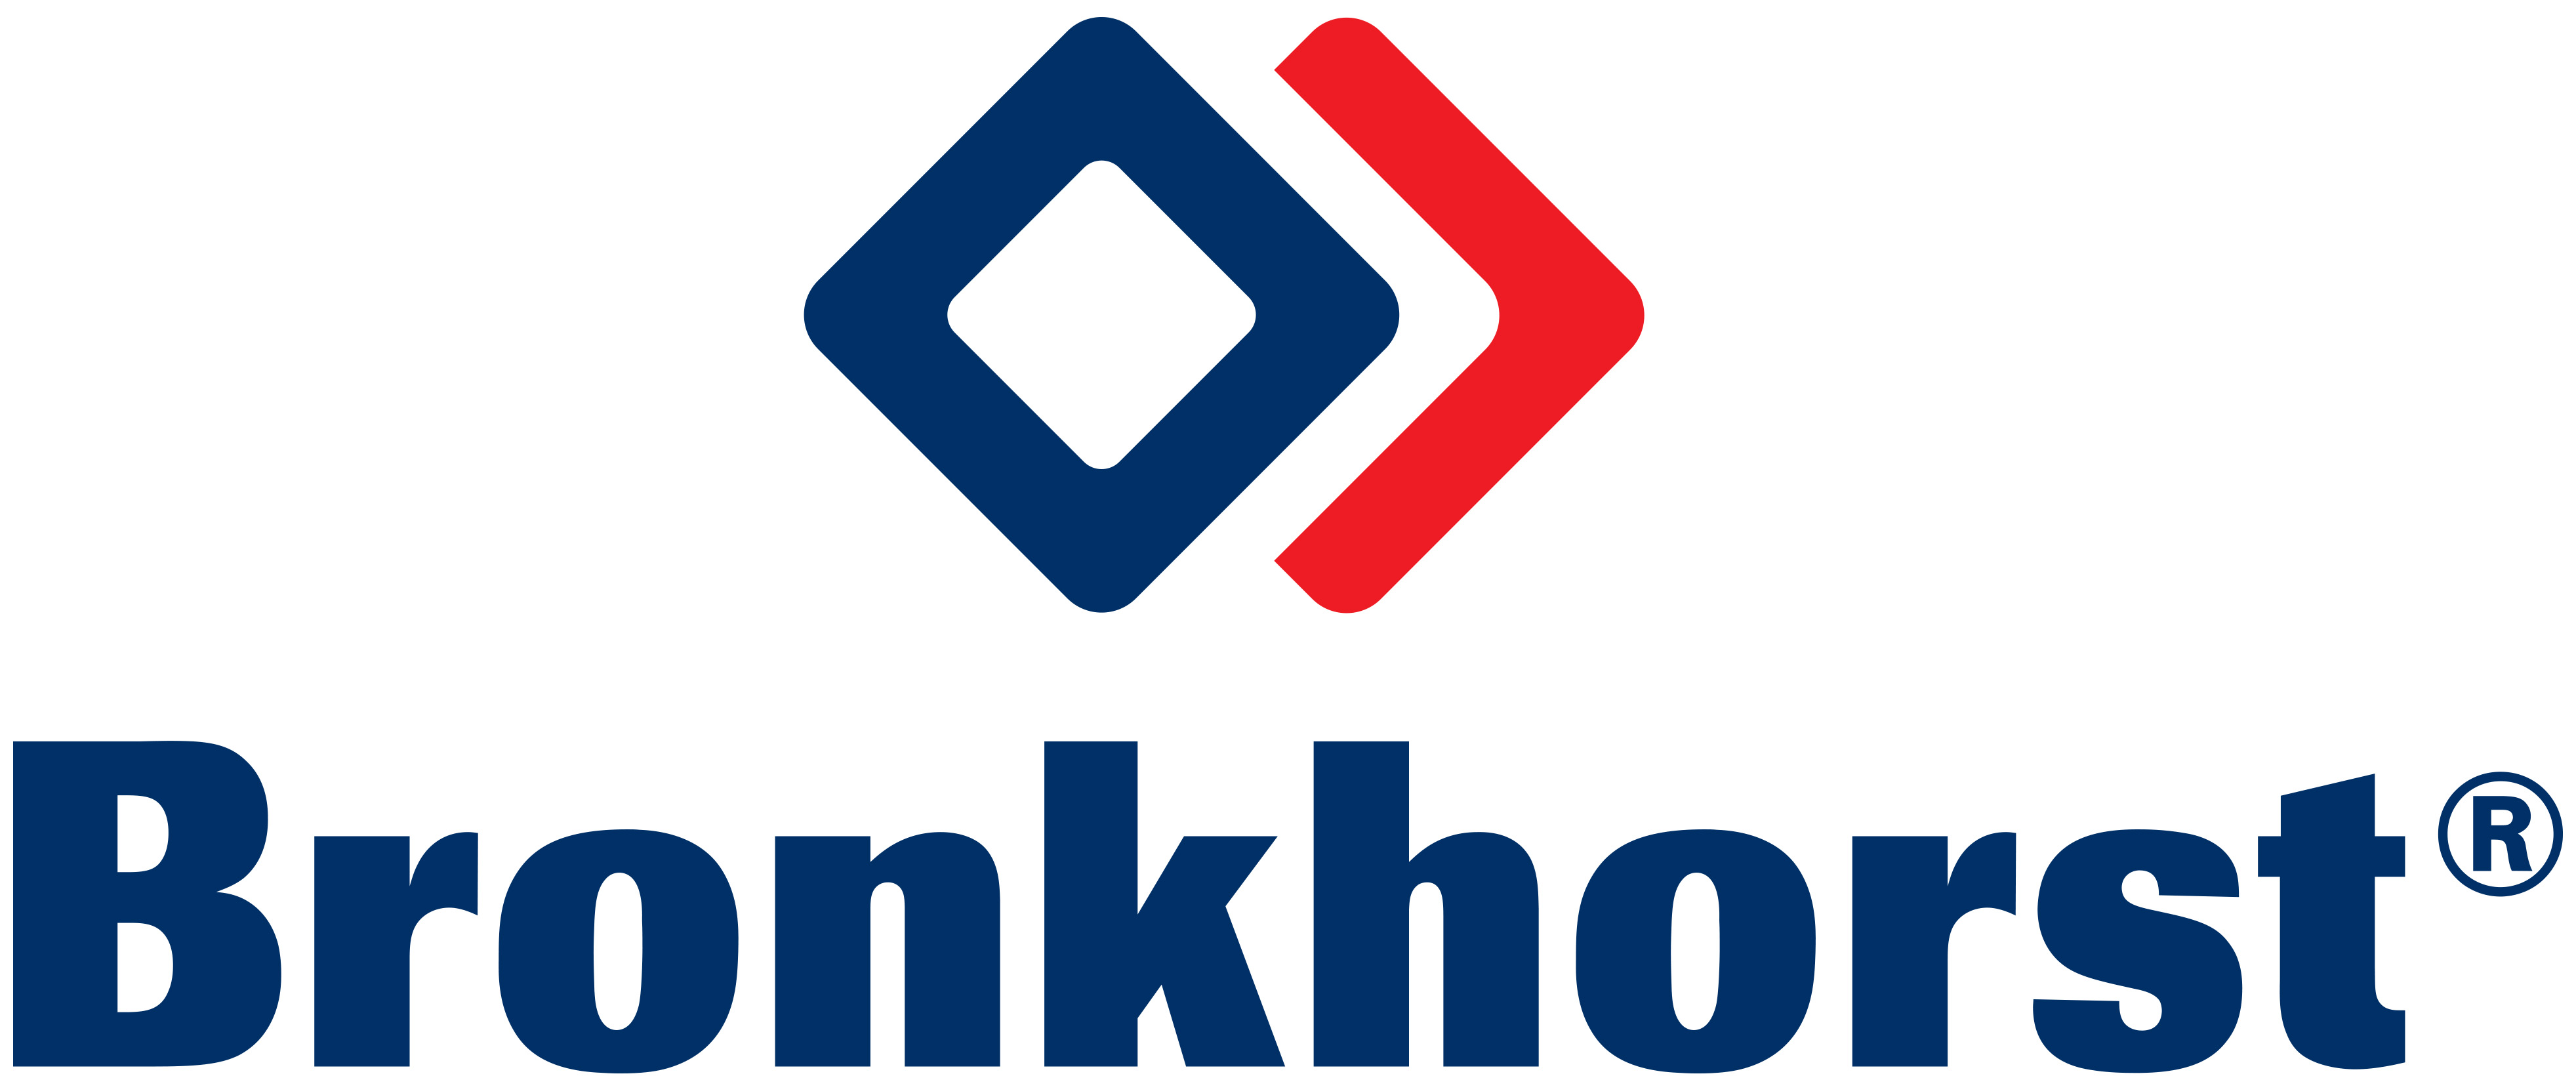 Bronkhorst logo